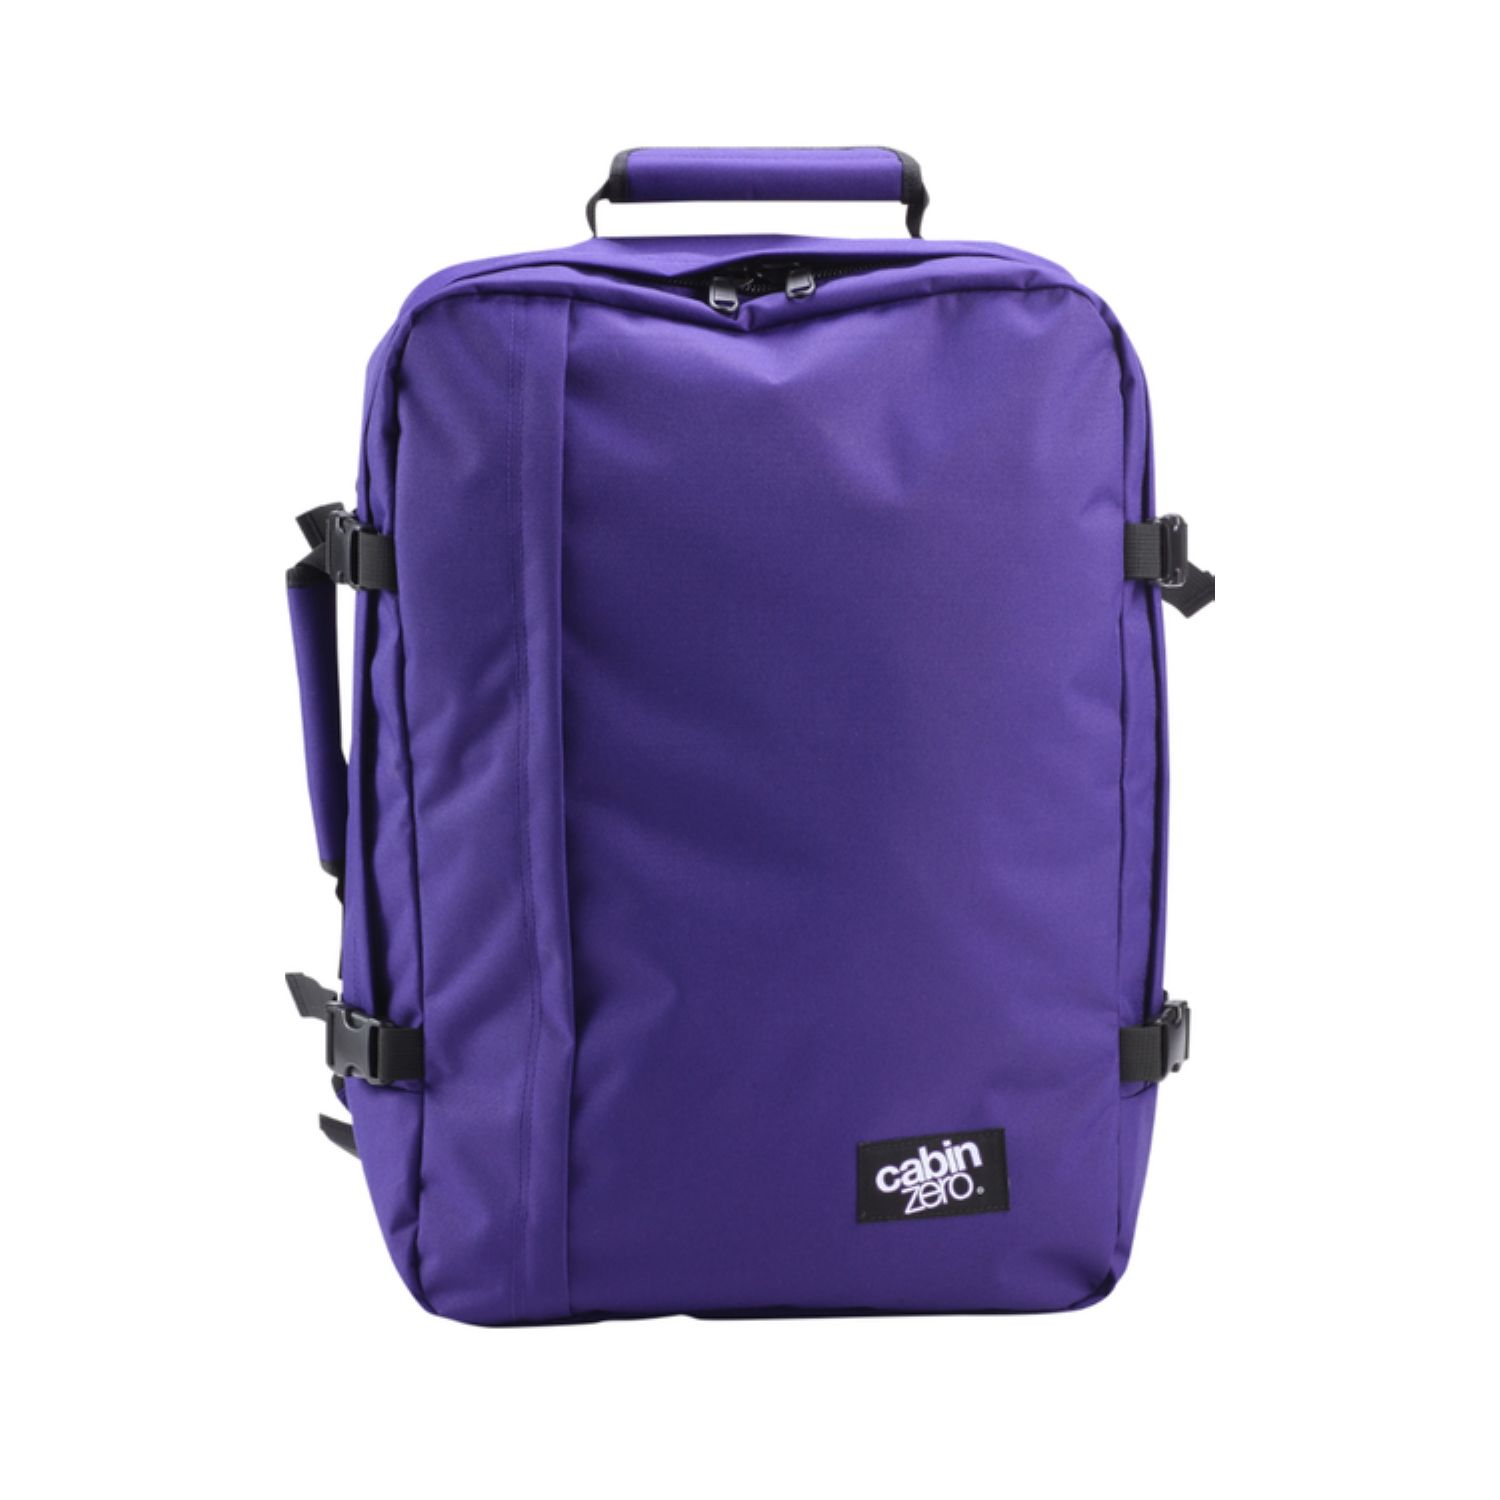 Cabinzero Classic Ultra Light Cabin Bag With Luggage Trackers 36L (Original Purple) - Seager Inc